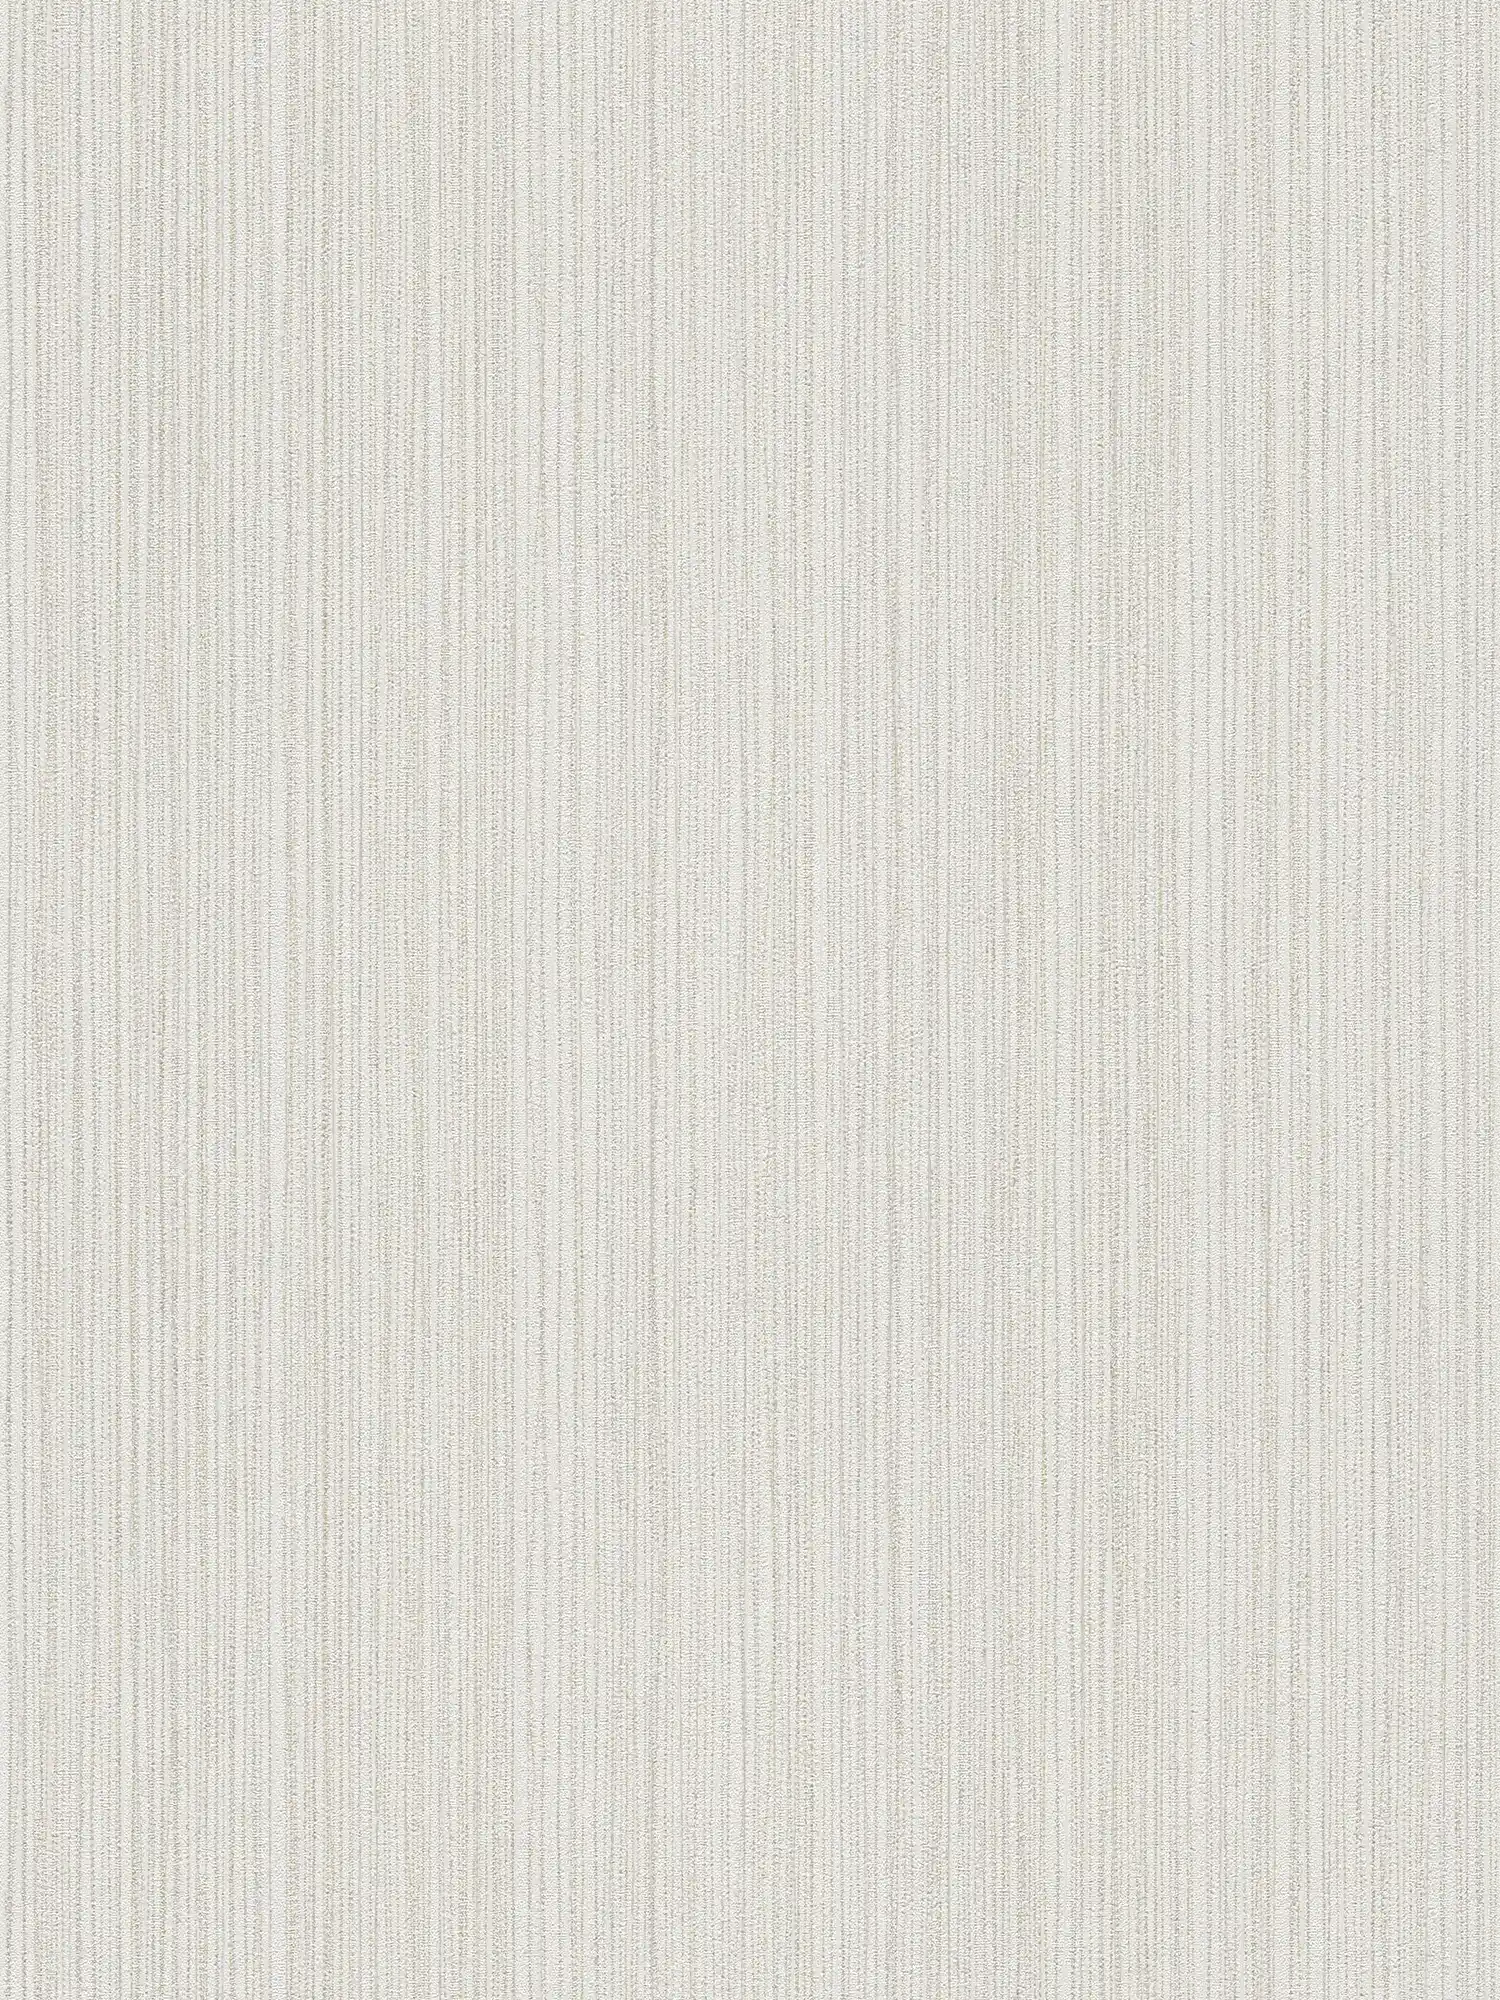 Light grey wallpaper with line pattern - metallic, grey
